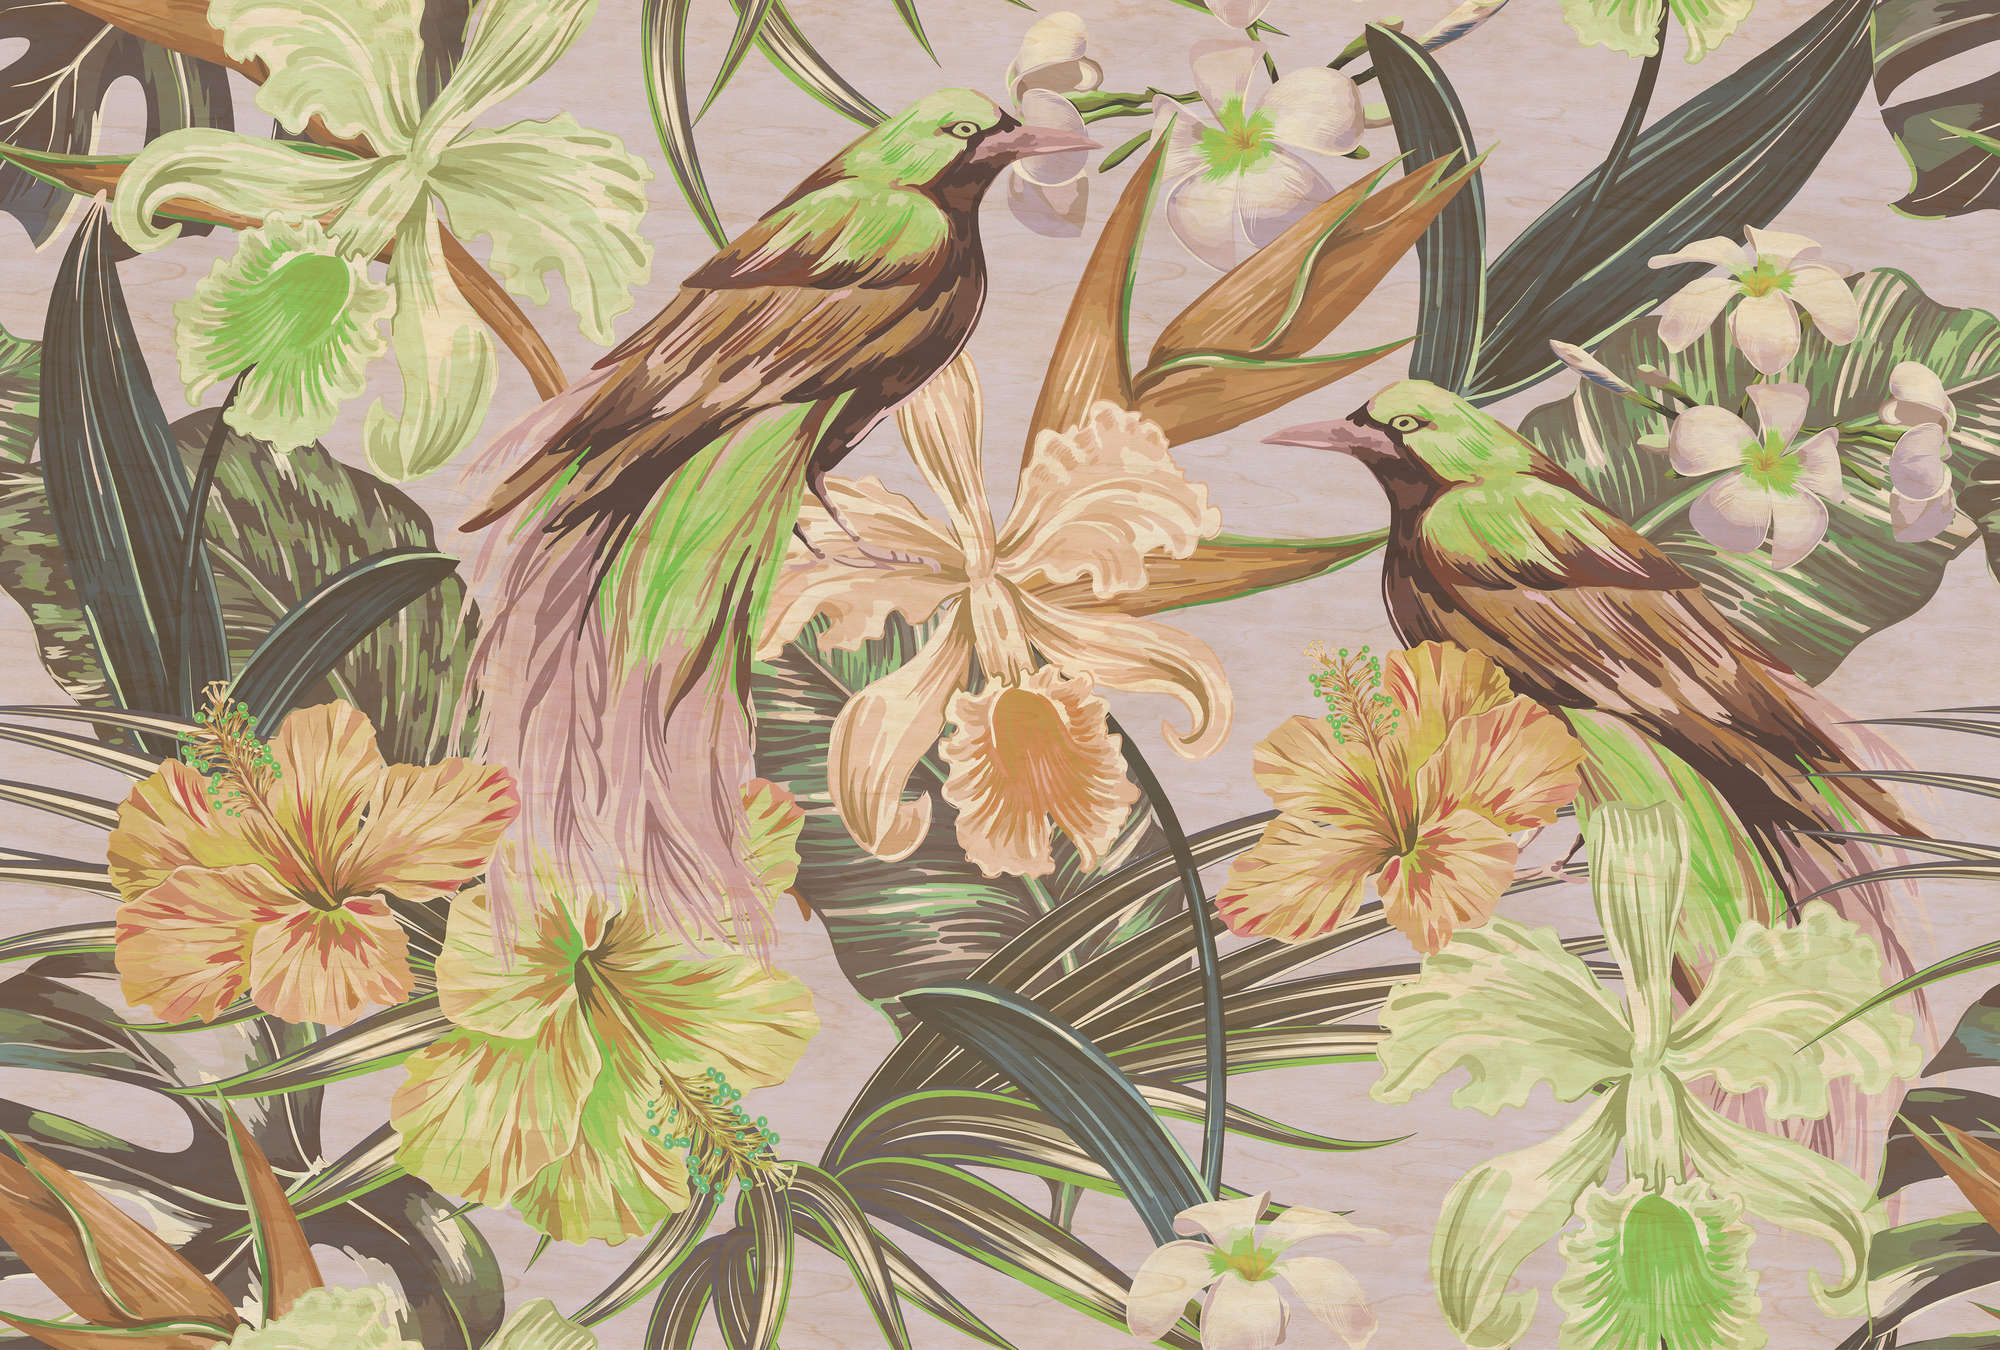             Exotic birds 2 - Photo wallpaper exotic birds & plants- scratch texture - Beige, Green | texture non-woven
        